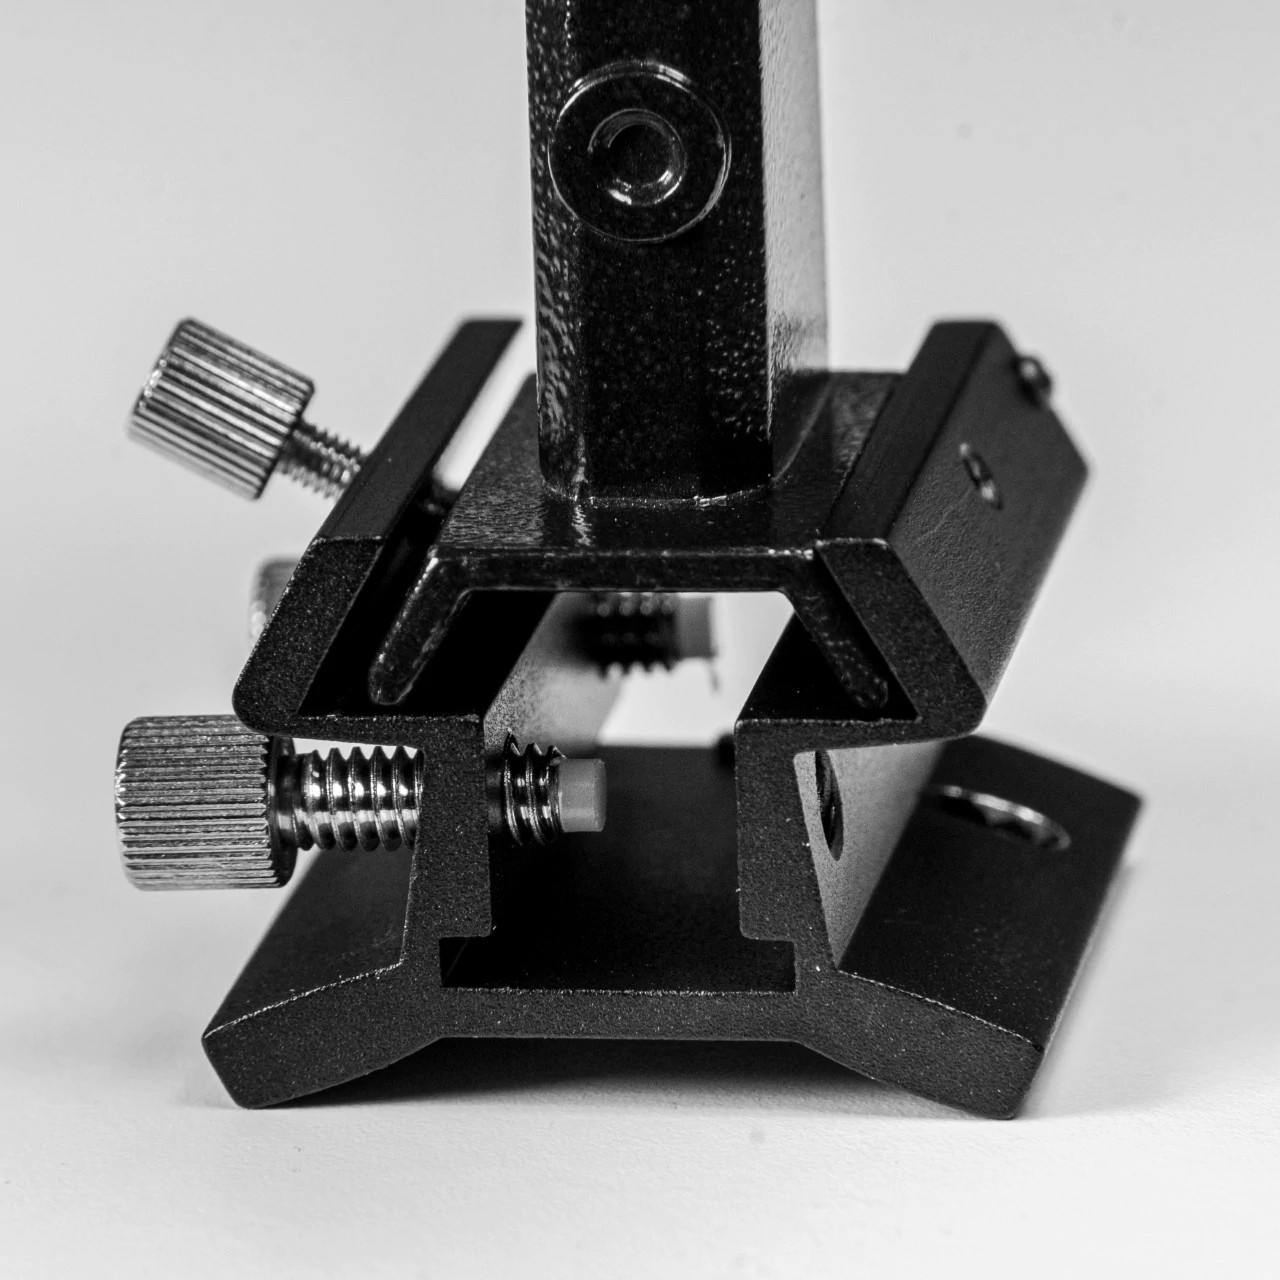 EXPLORE SCIENTIFIC Hybrid Finder Scope Base - black